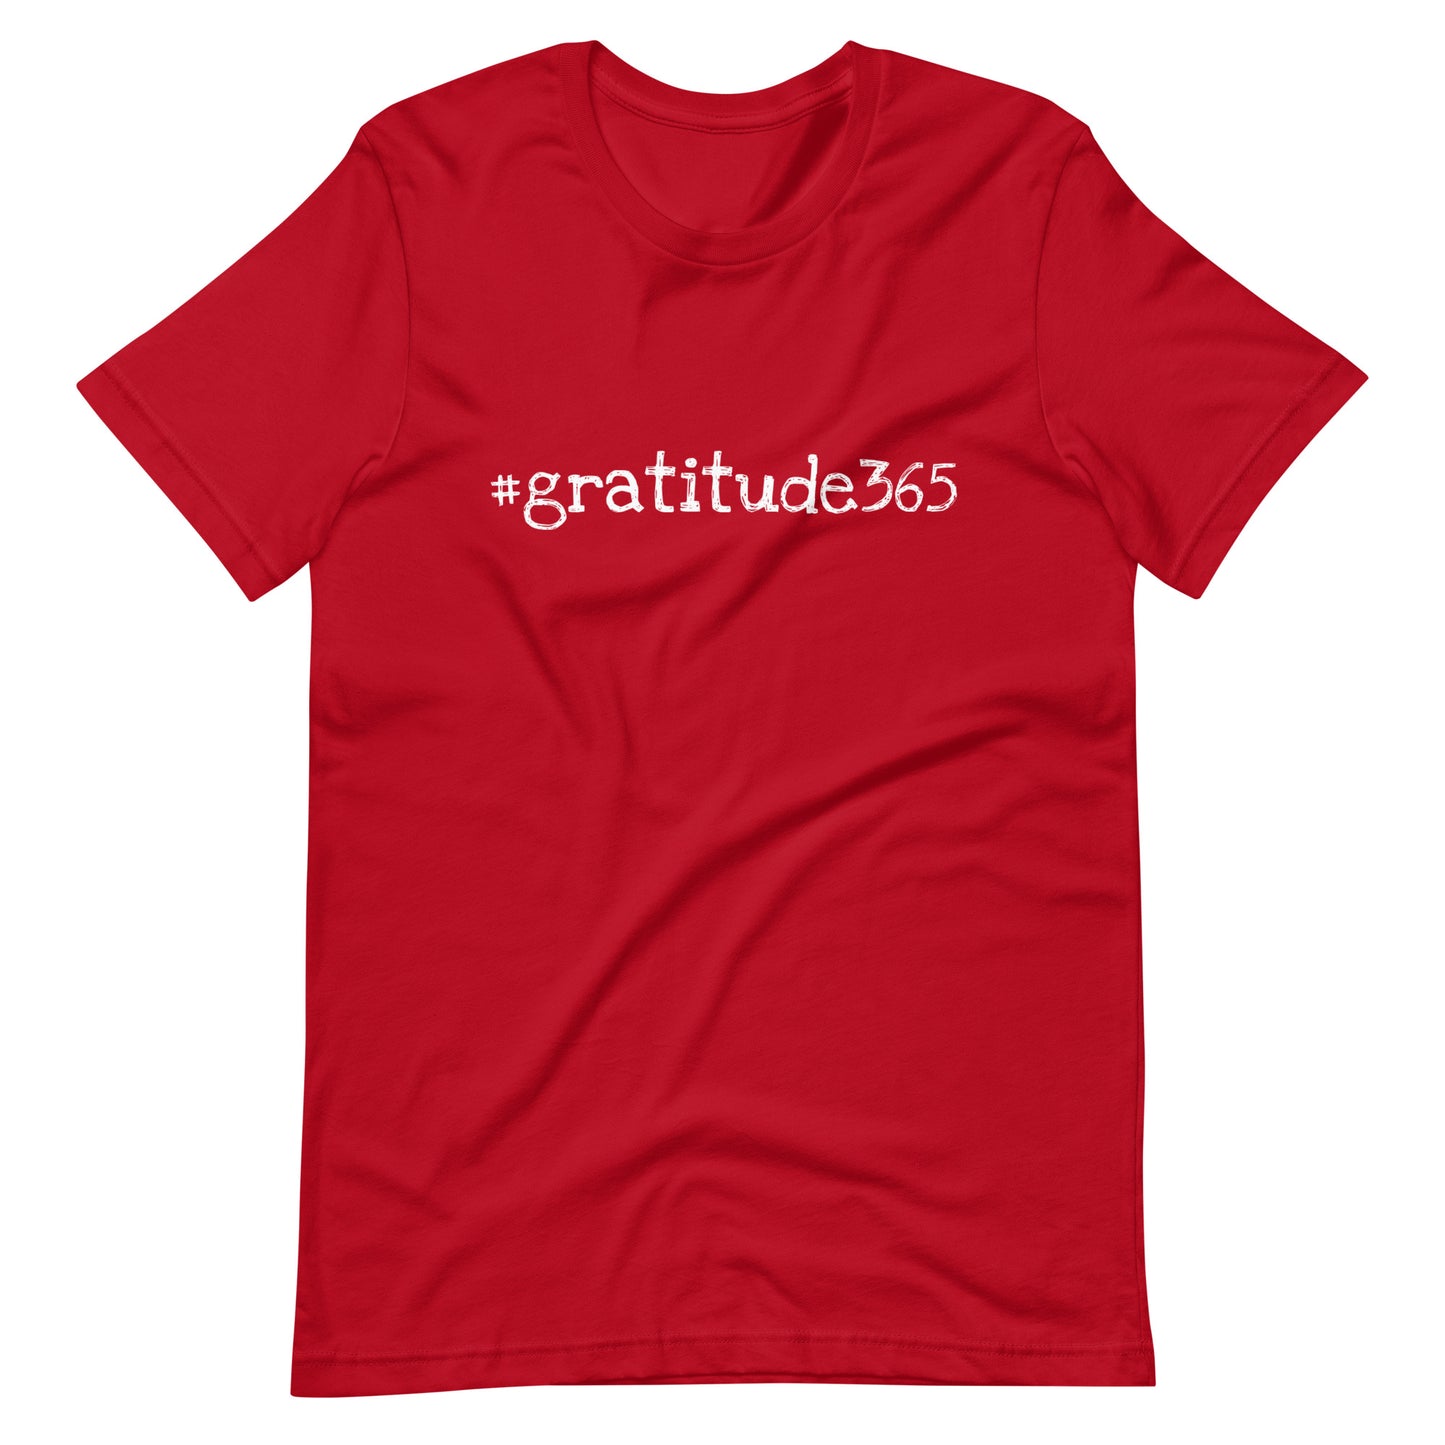 #gratitude365 women's shirt in red